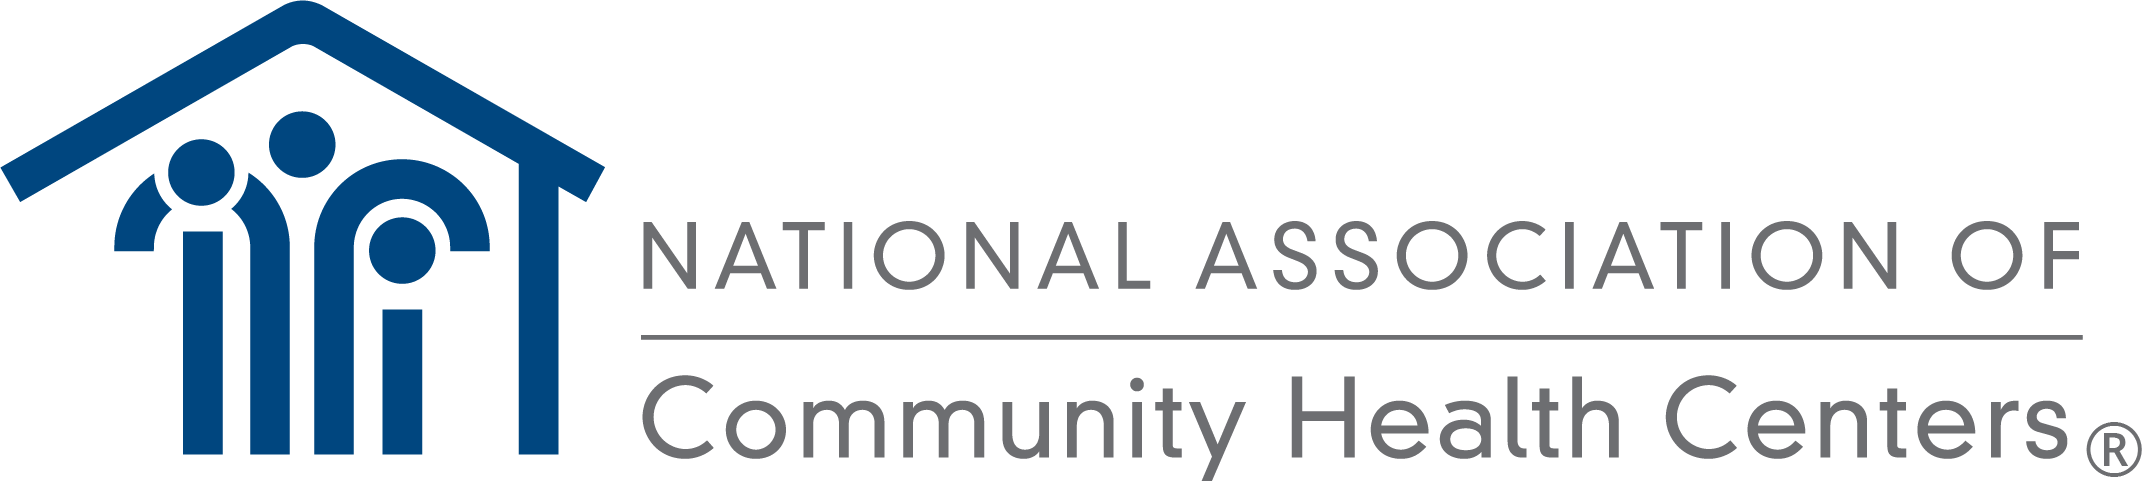 National Association of Community Health Centers Logo